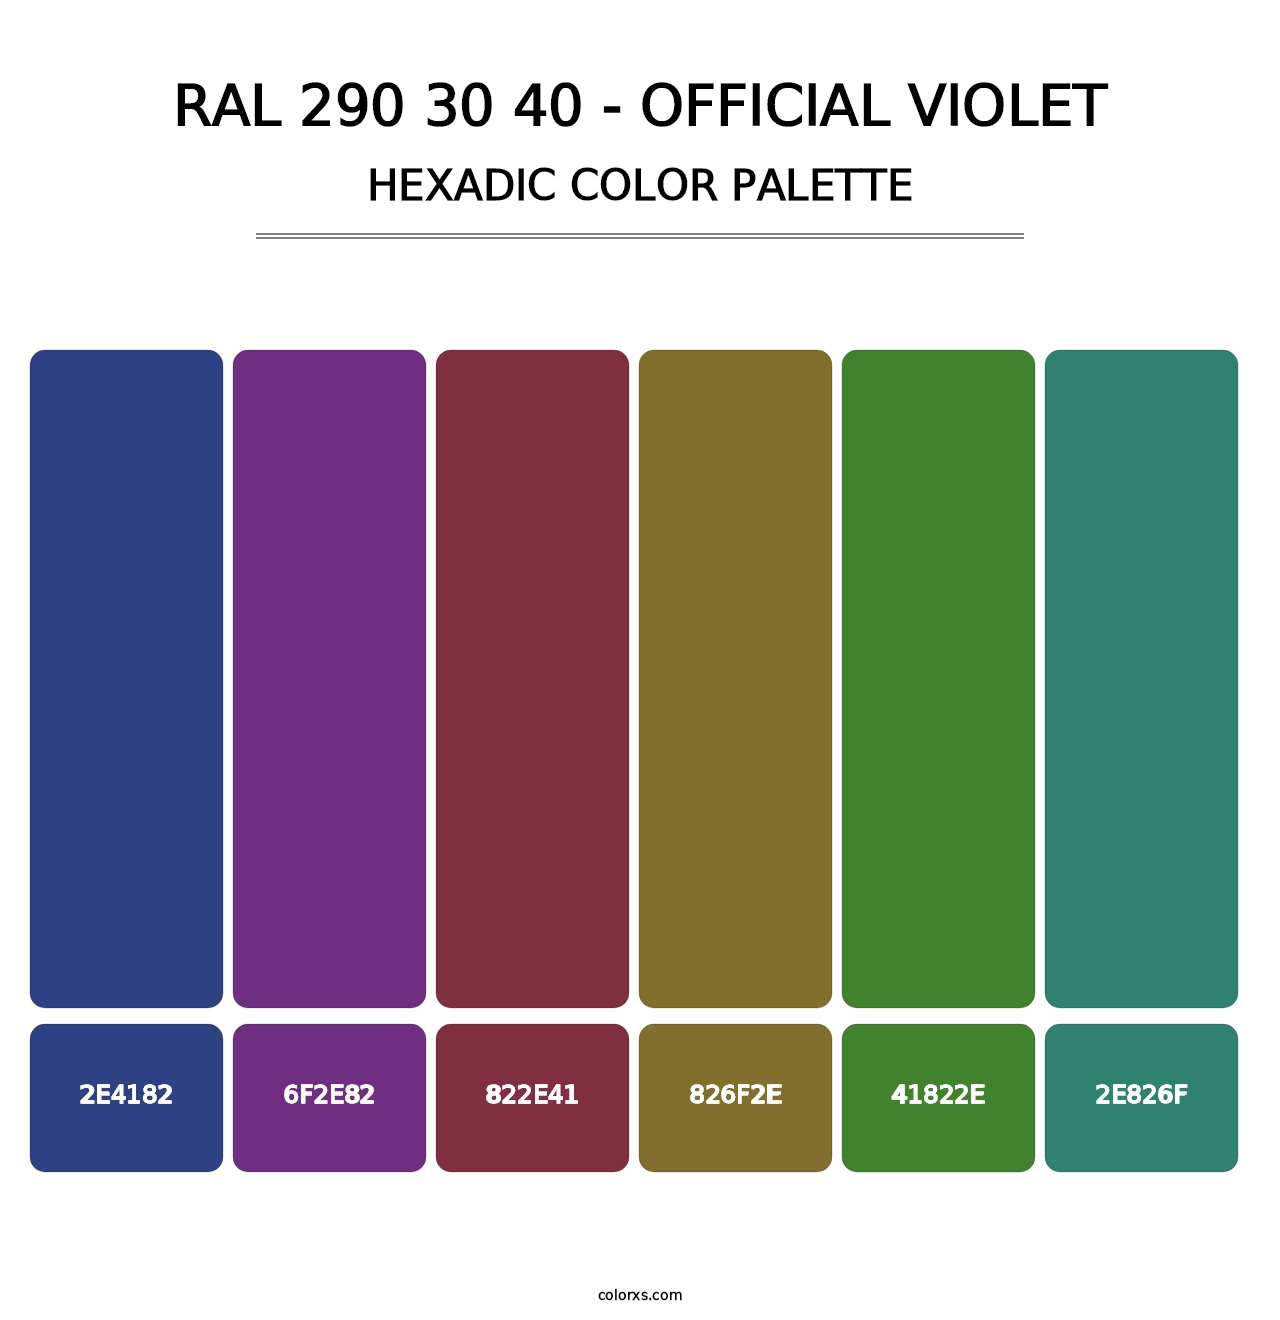 RAL 290 30 40 - Official Violet - Hexadic Color Palette